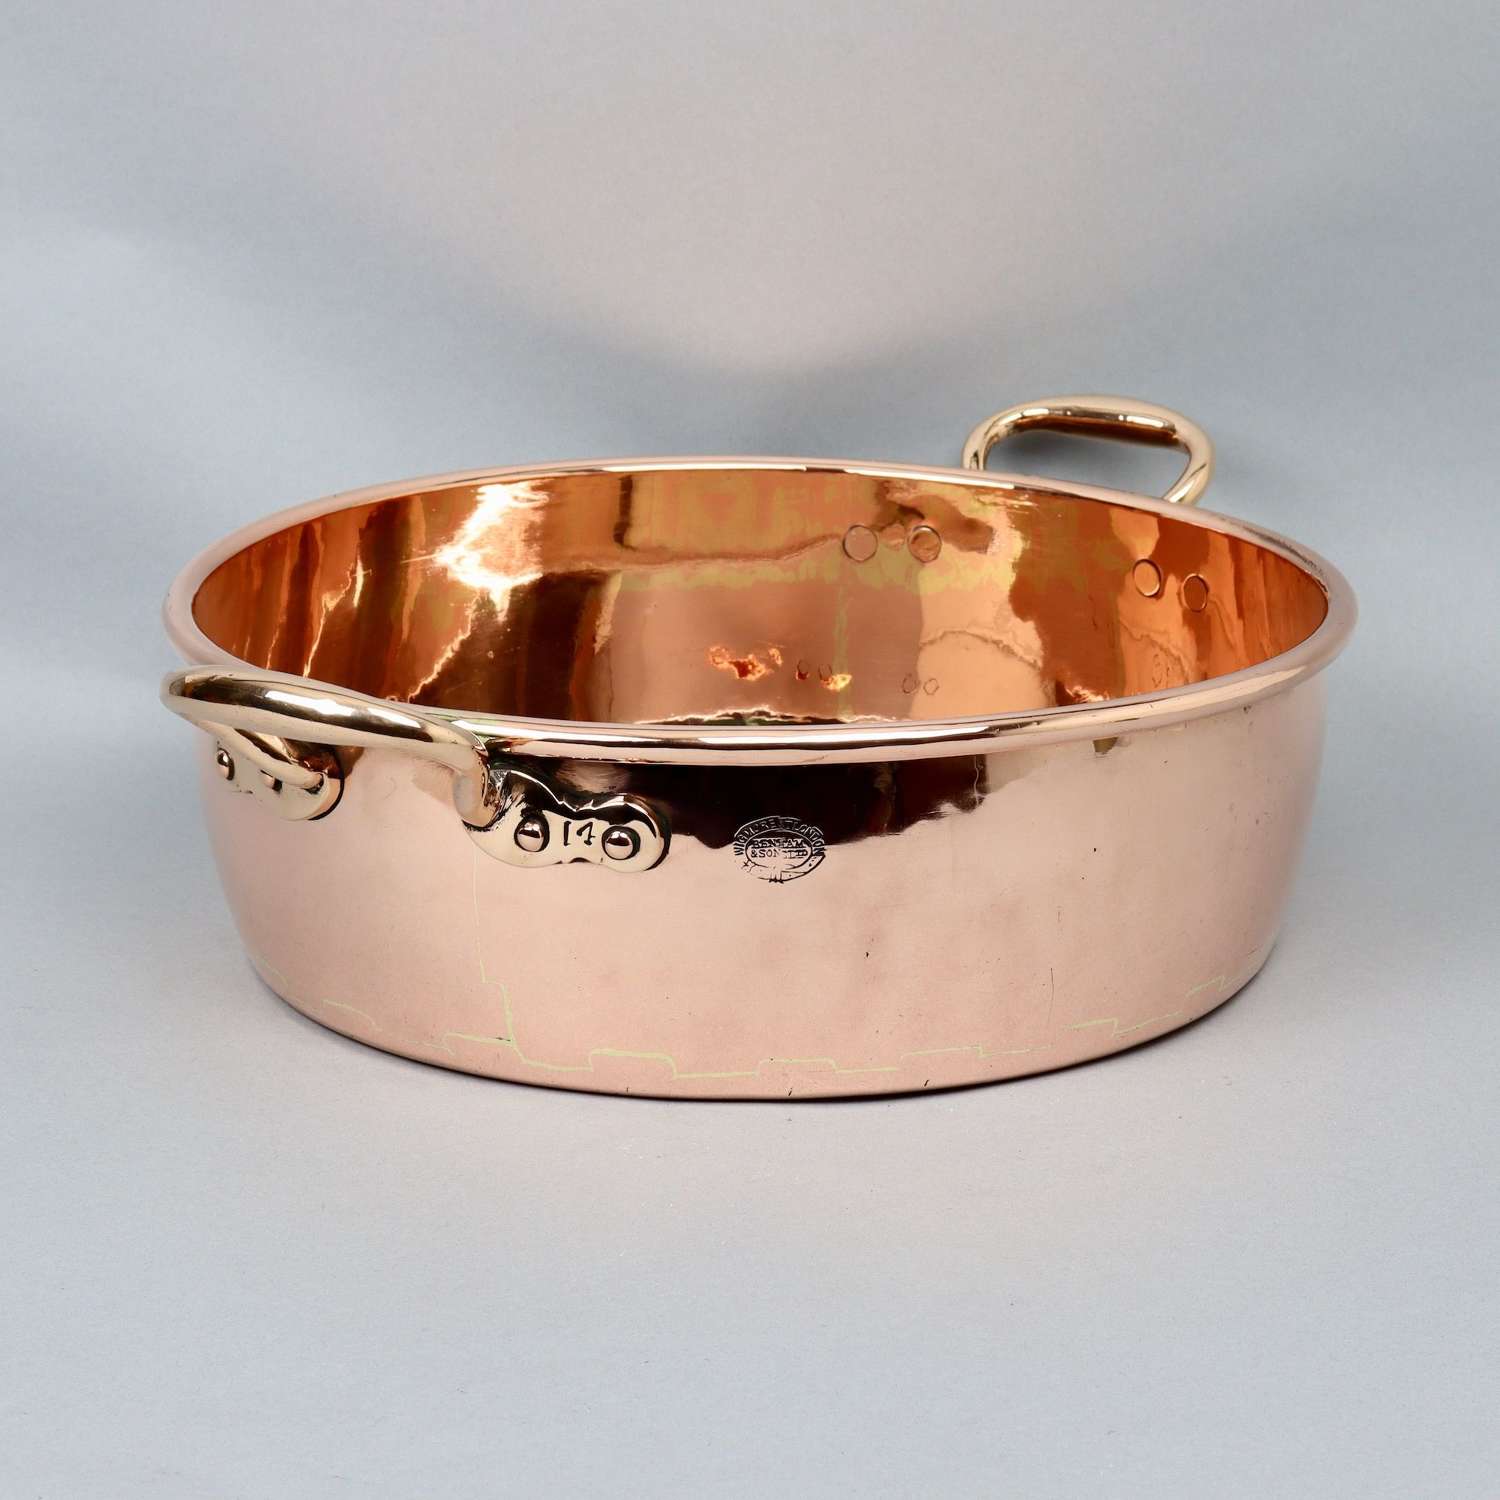 Good, Benham's Copper Preserve Pan